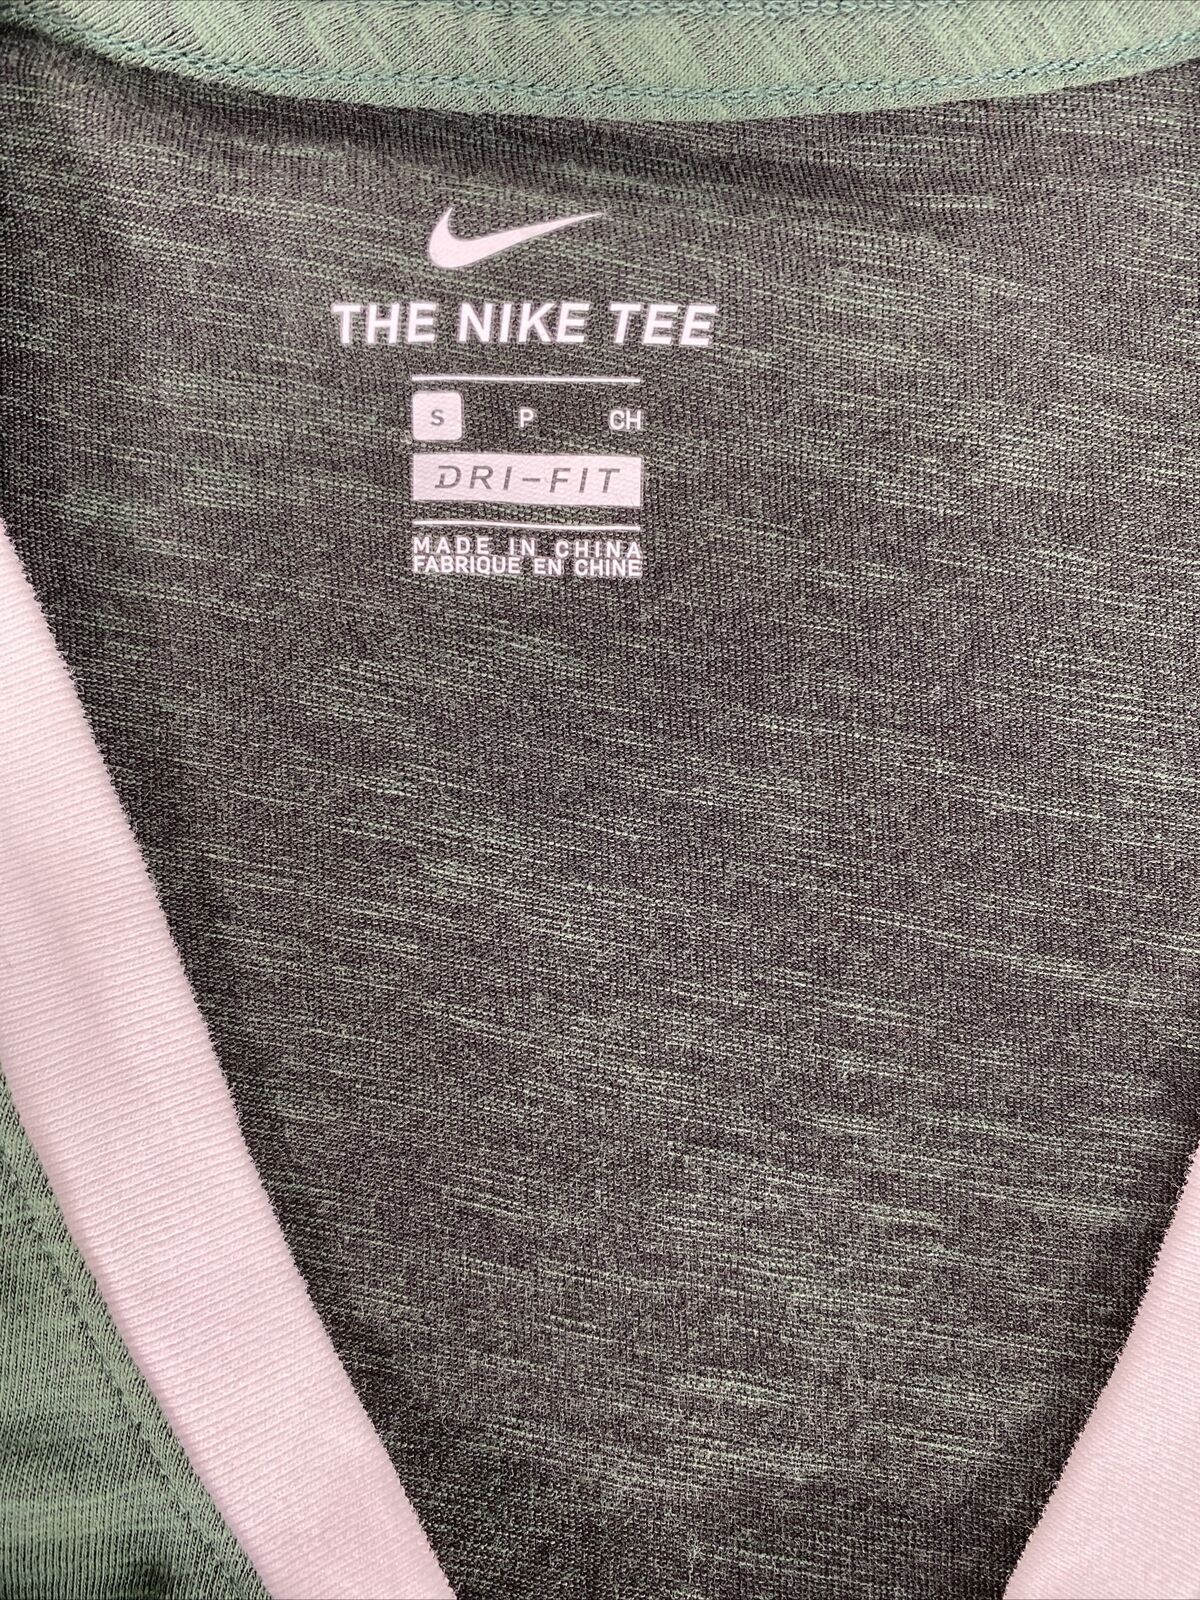 Nike Women's Green Cotton Michigan State MSU V-Neck T-Shirt - S